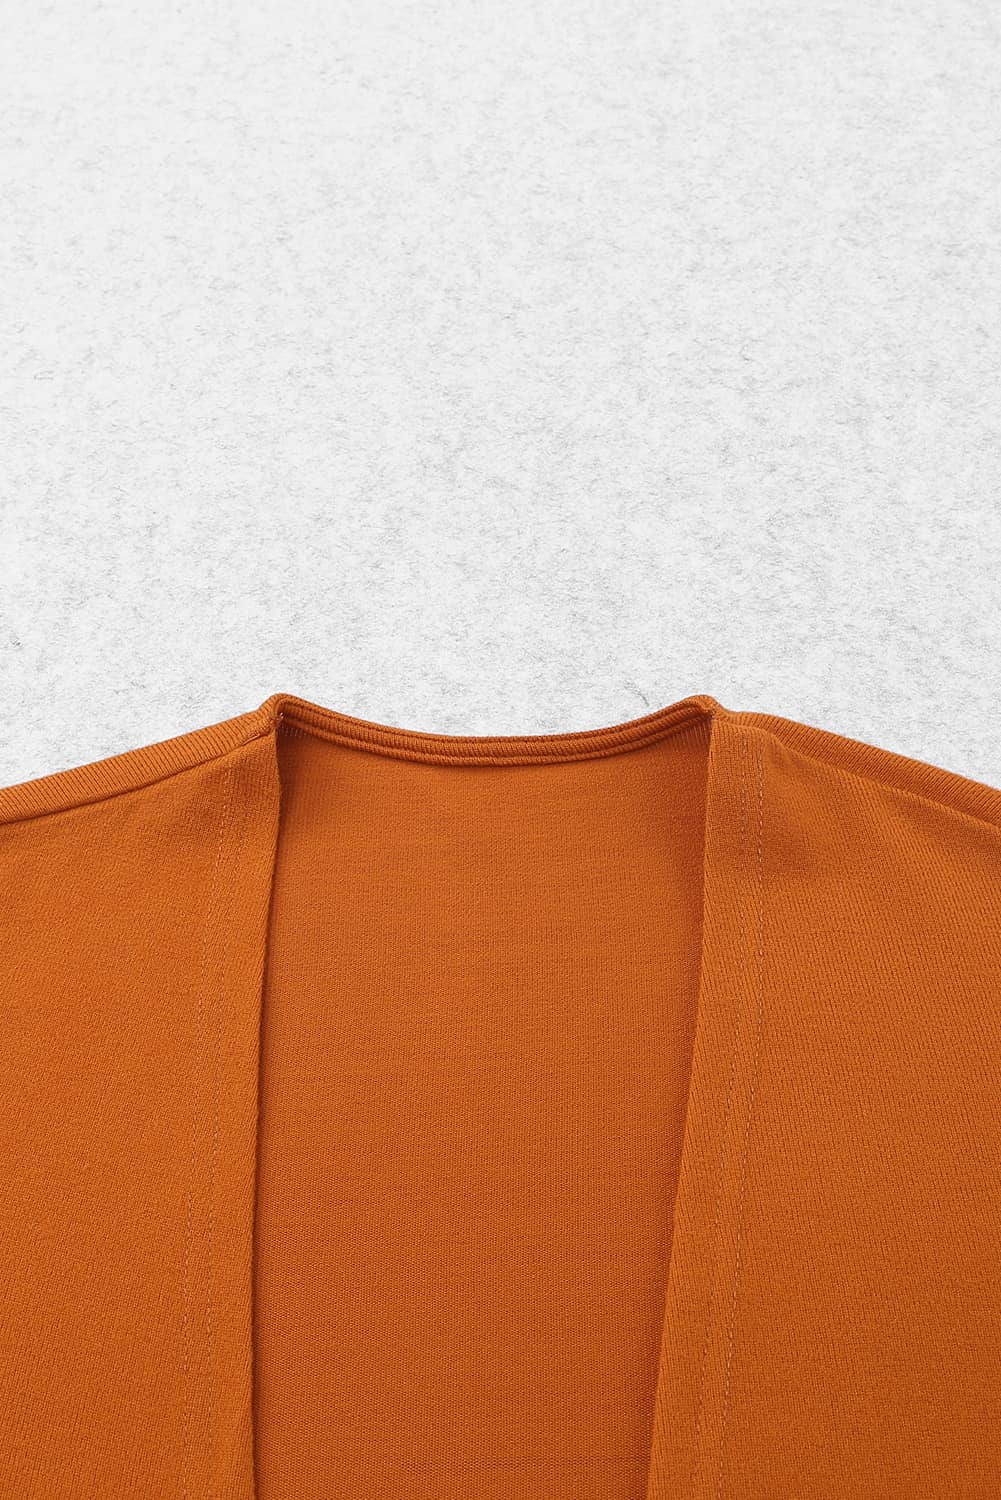 Orange Leopard Print Colorblock Patchwork Knit Cardigan